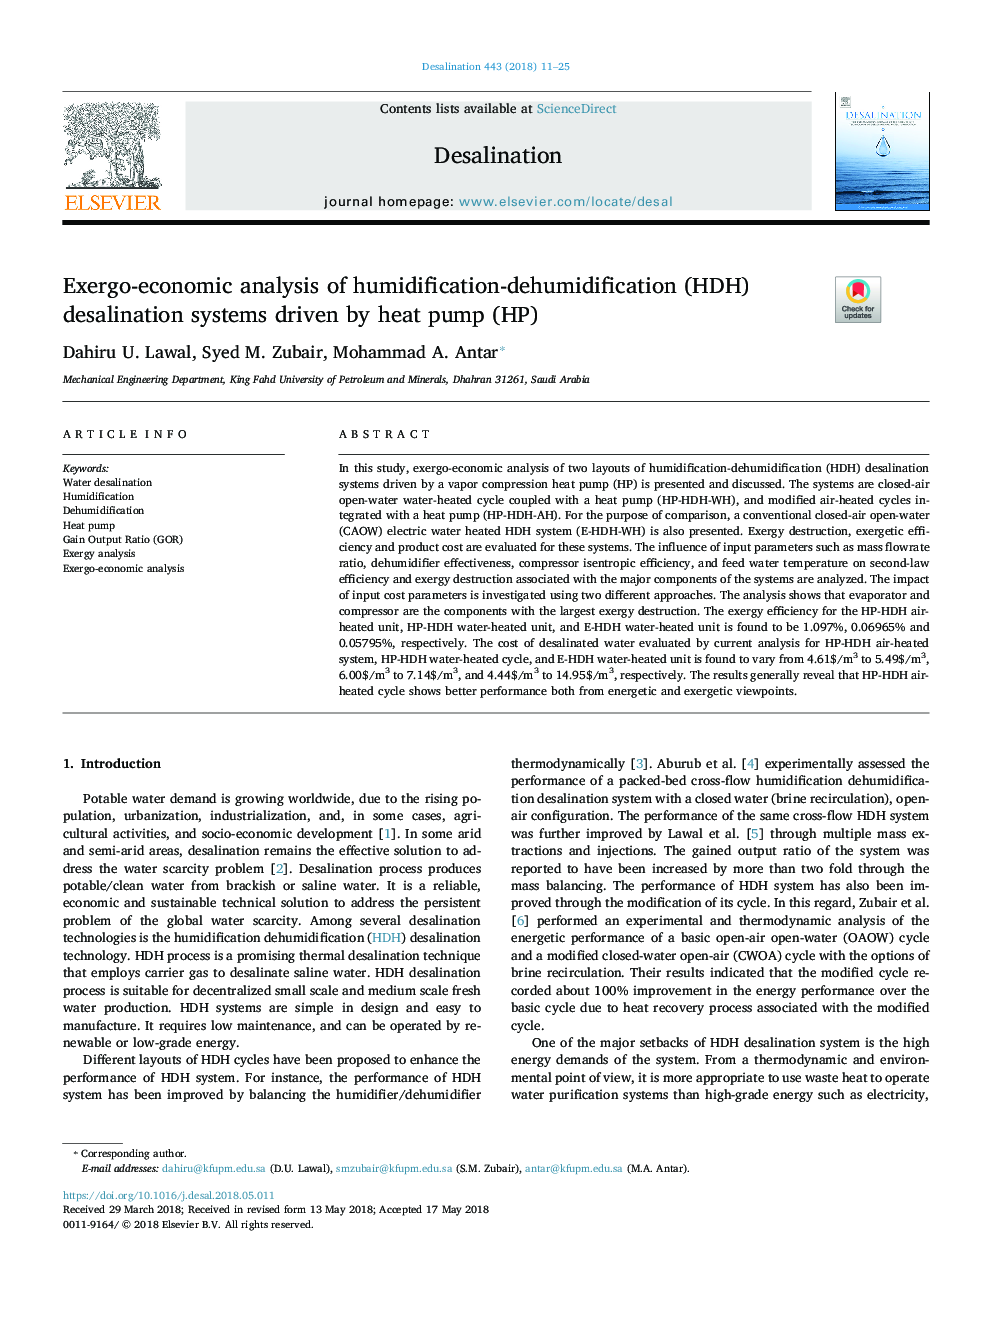 Exergo-economic analysis of humidification-dehumidification (HDH) desalination systems driven by heat pump (HP)